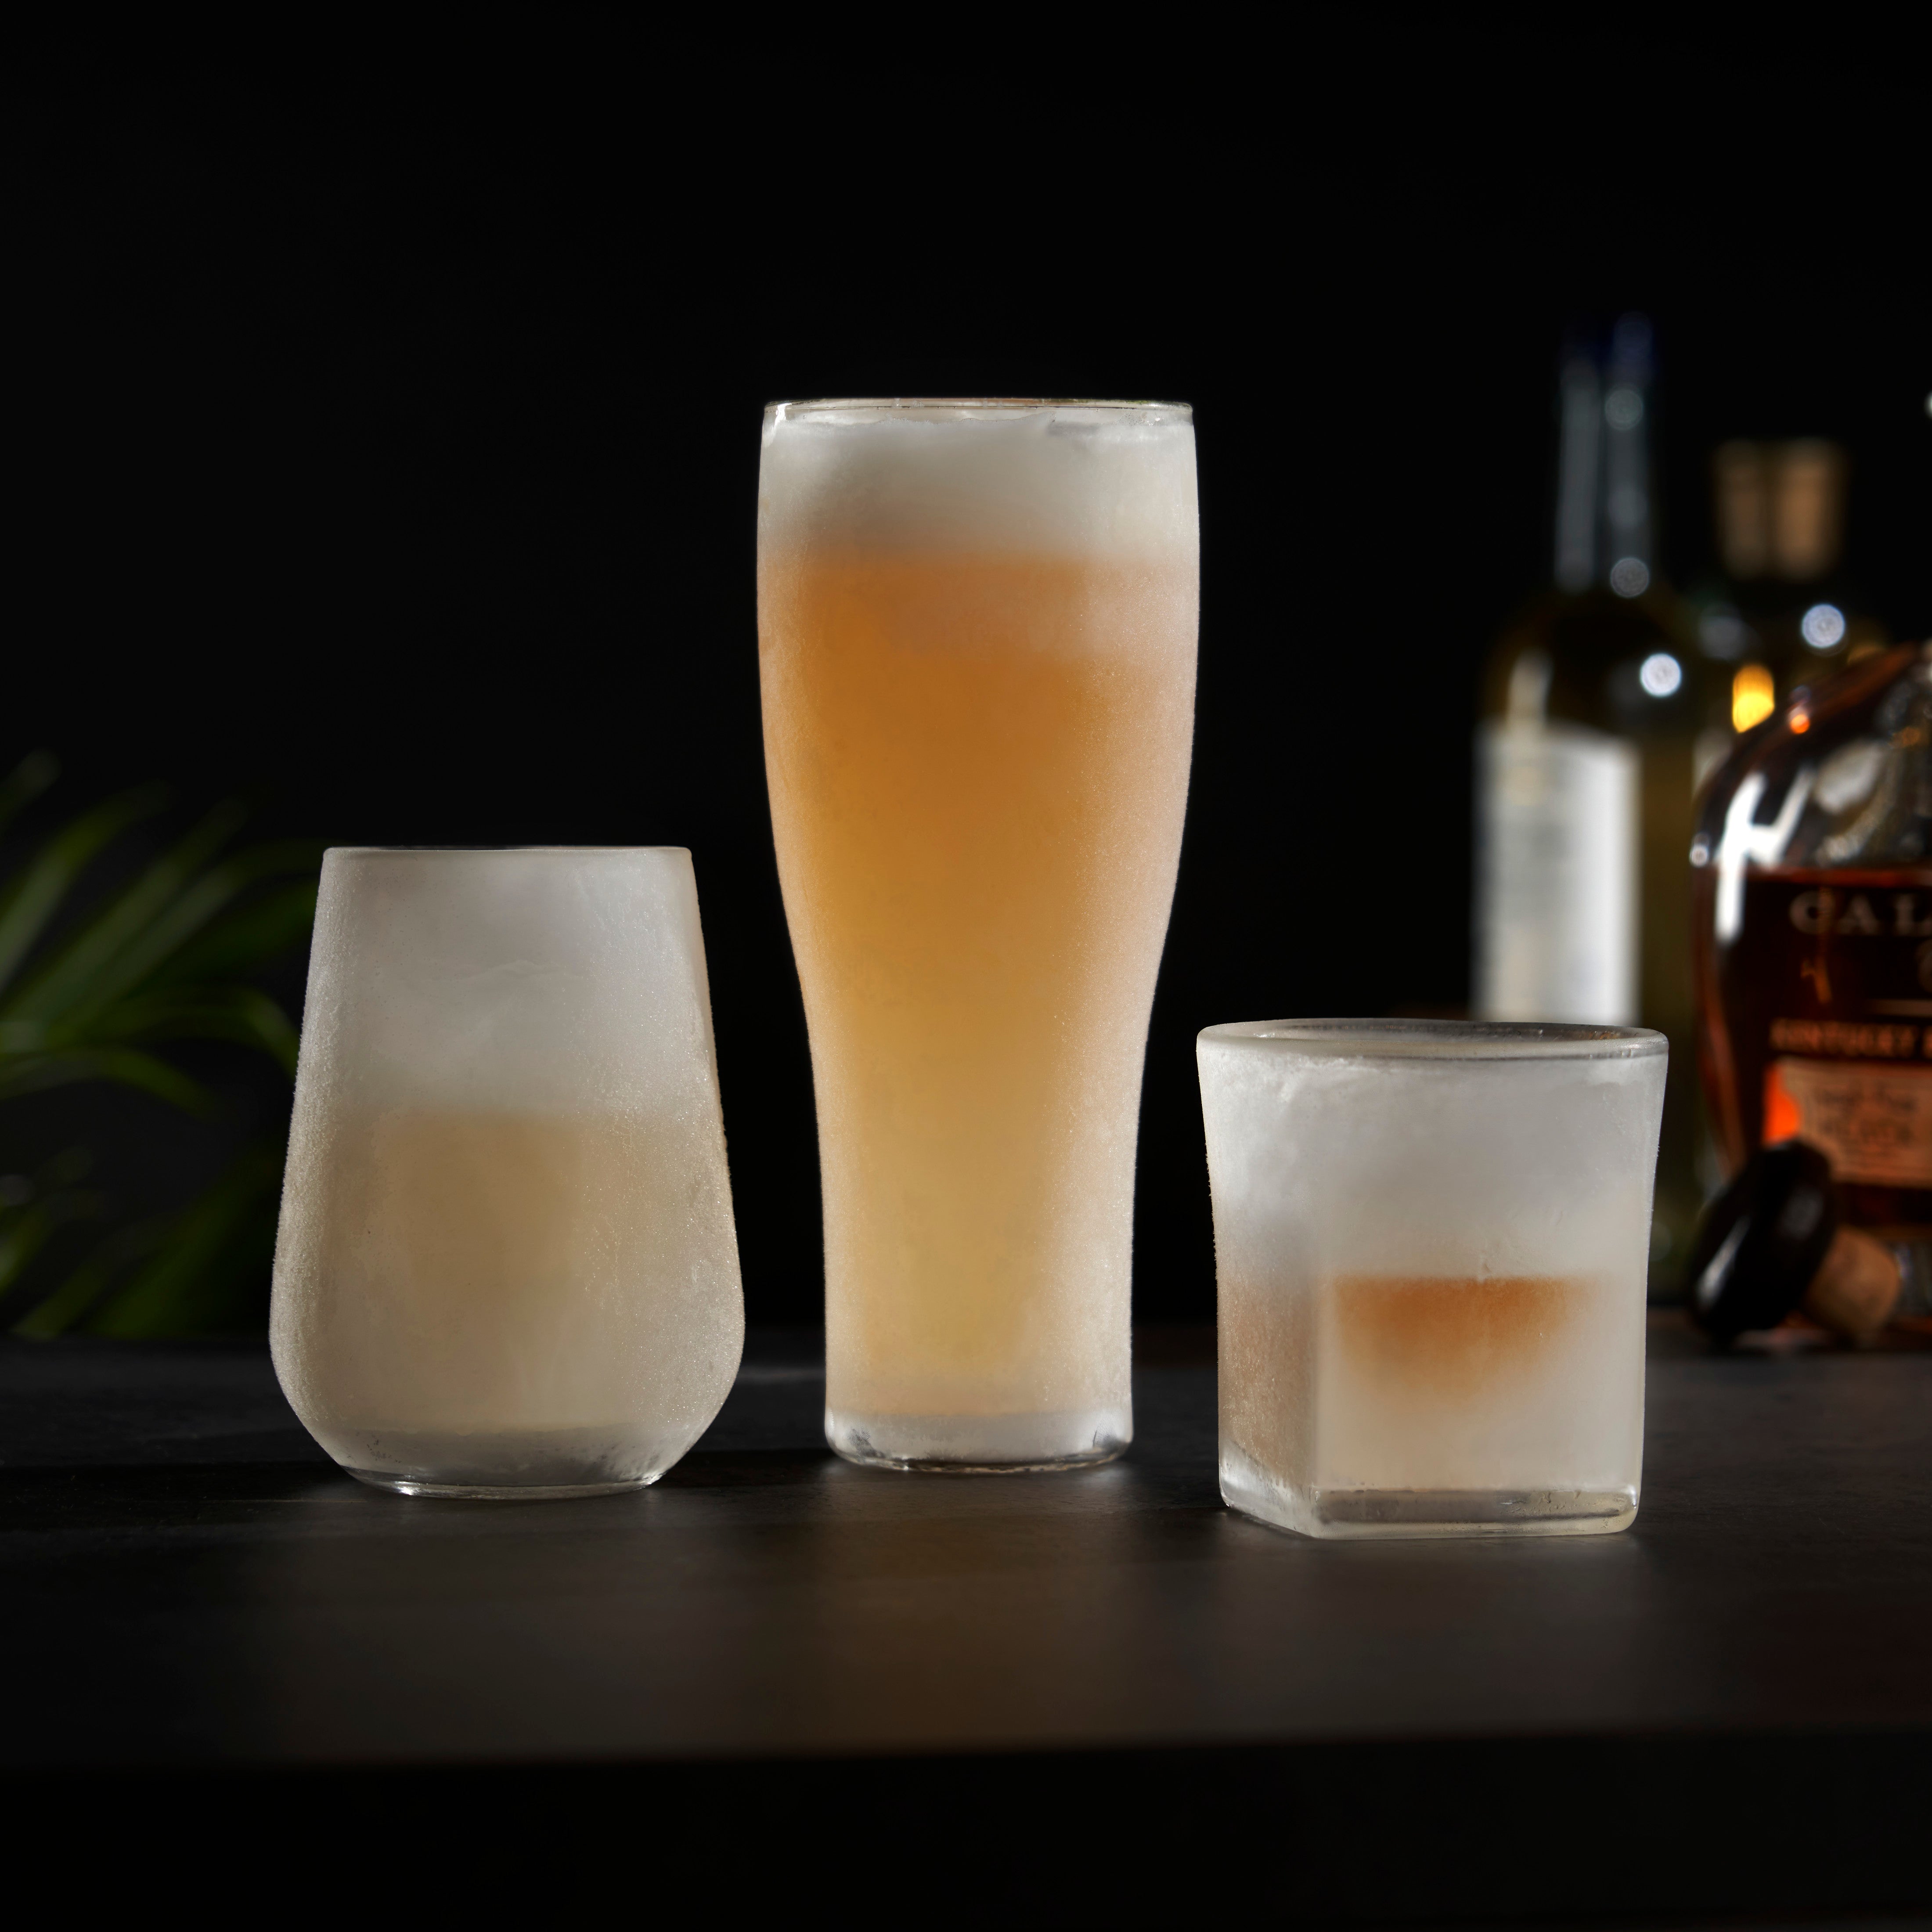 Spiral Pattern Whisky Glass, Freezer Beer Glasses, Stylish